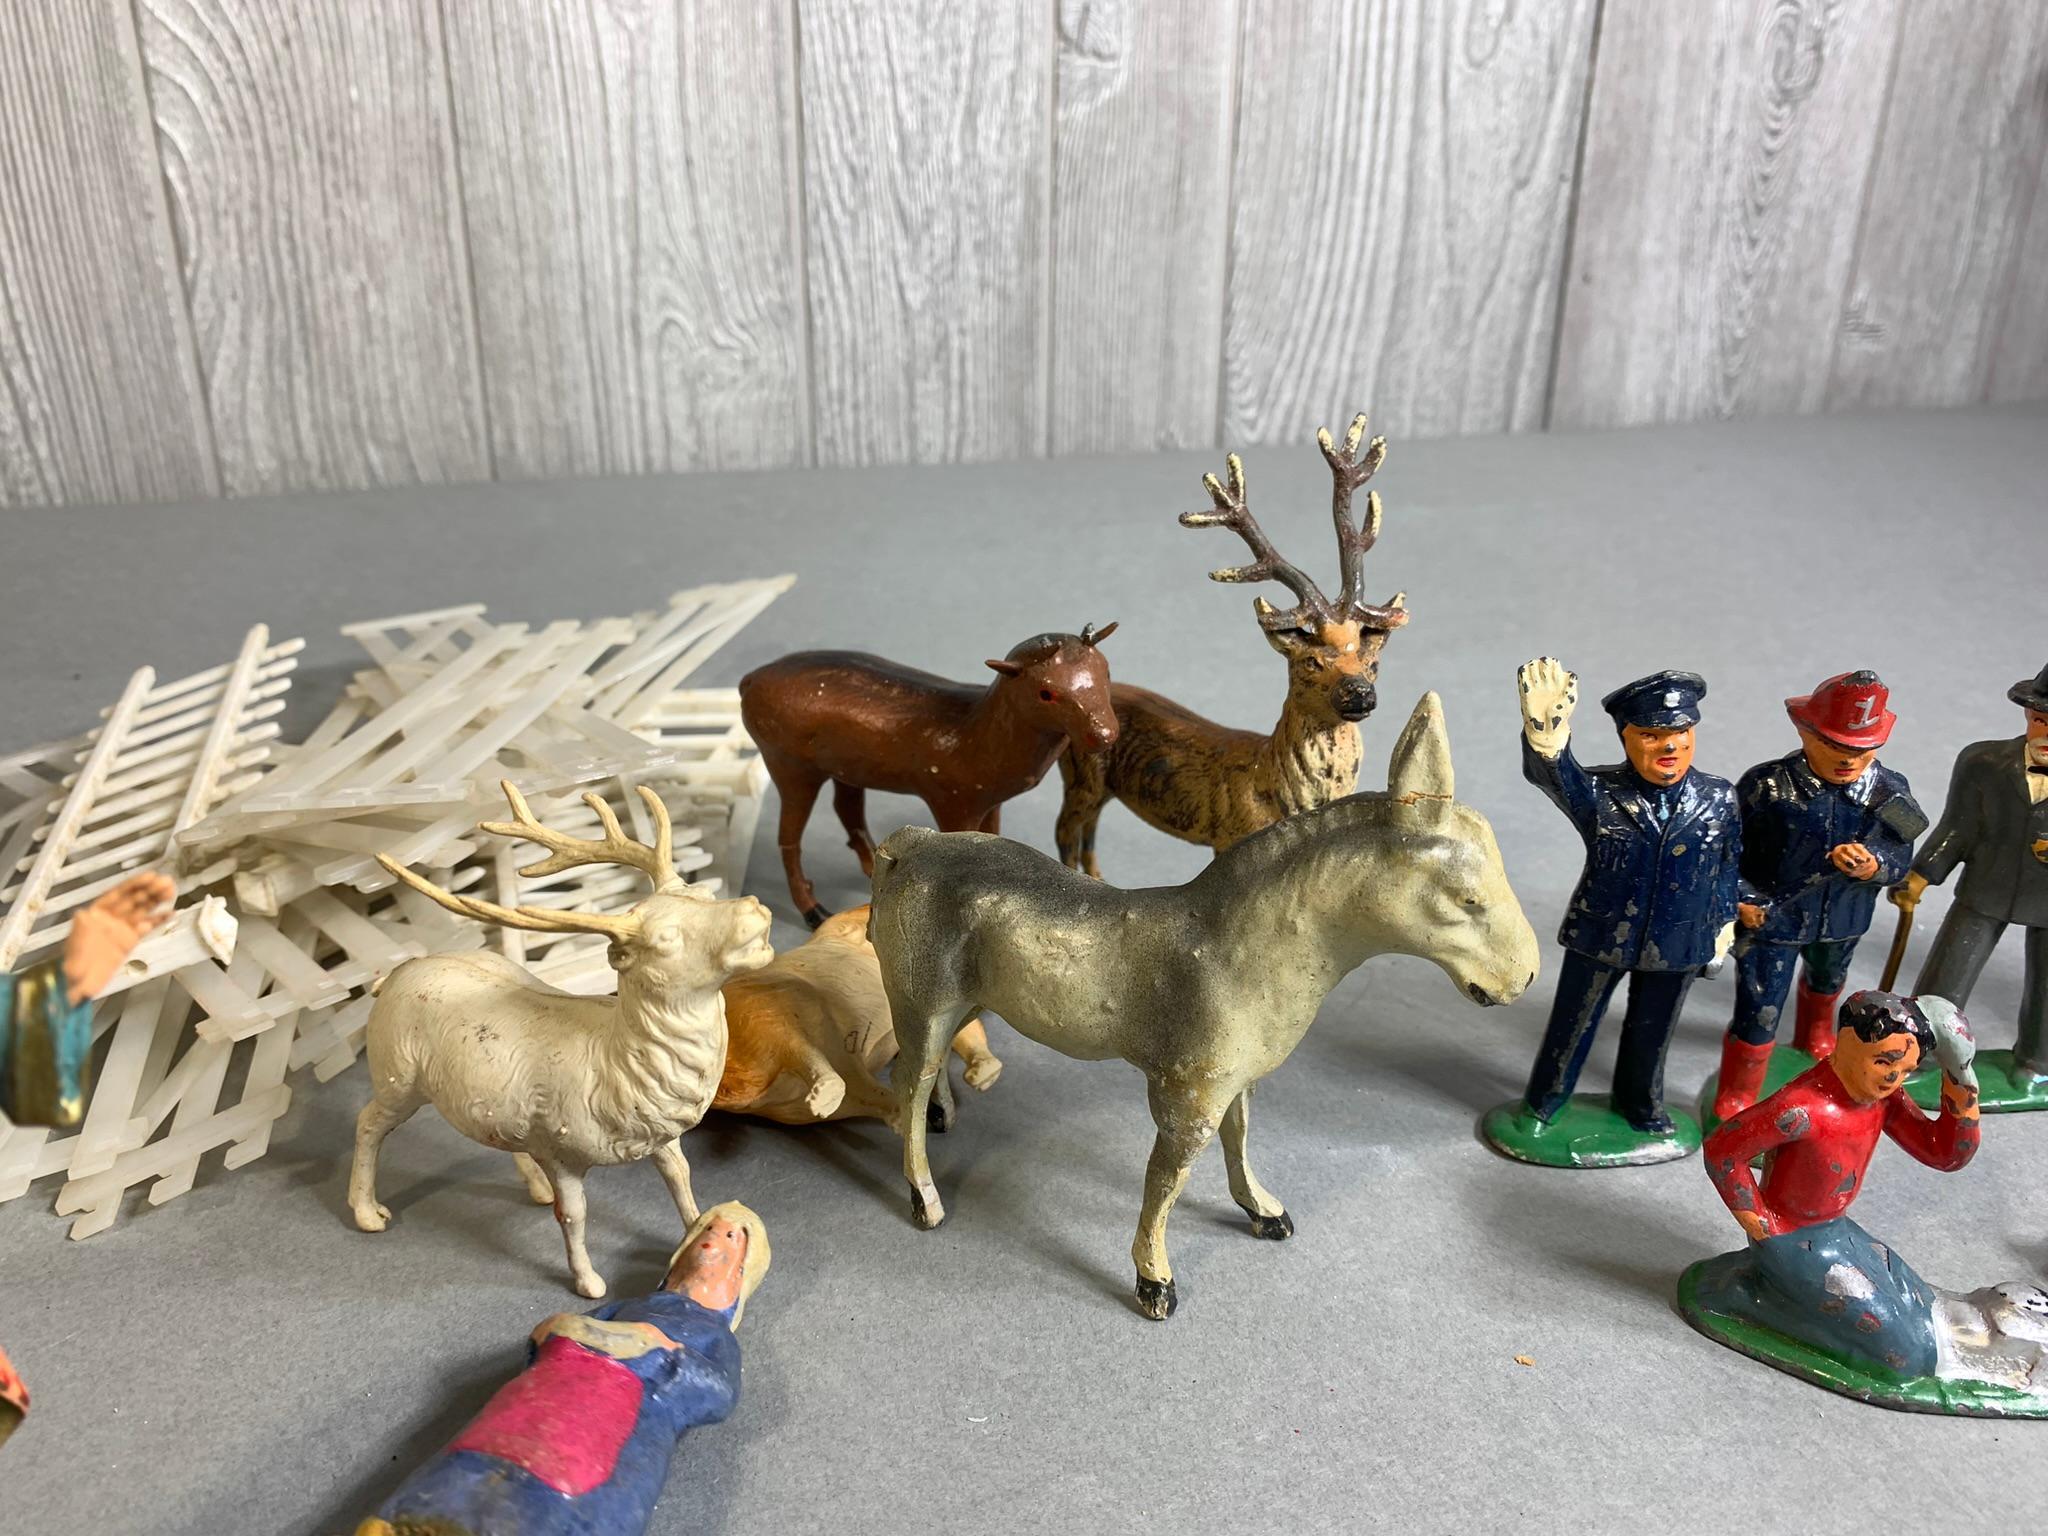 Barclay Lead Figures & Nativity Items, Plastic Fence